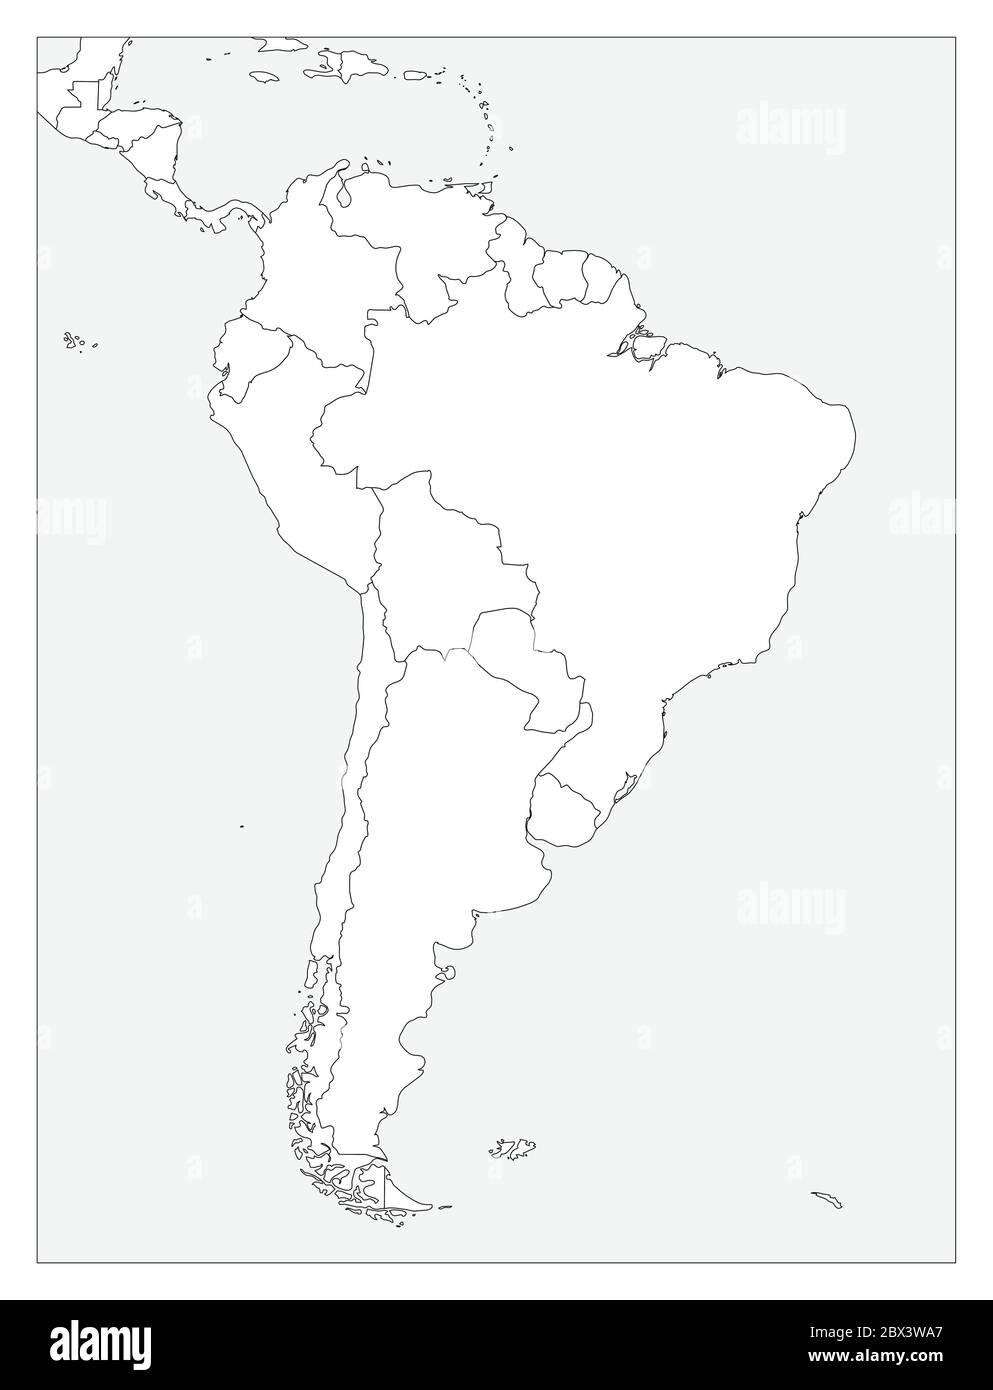 Leere politische Karte von Südamerika. Einfache flache Vektorskizze. Stock Vektor